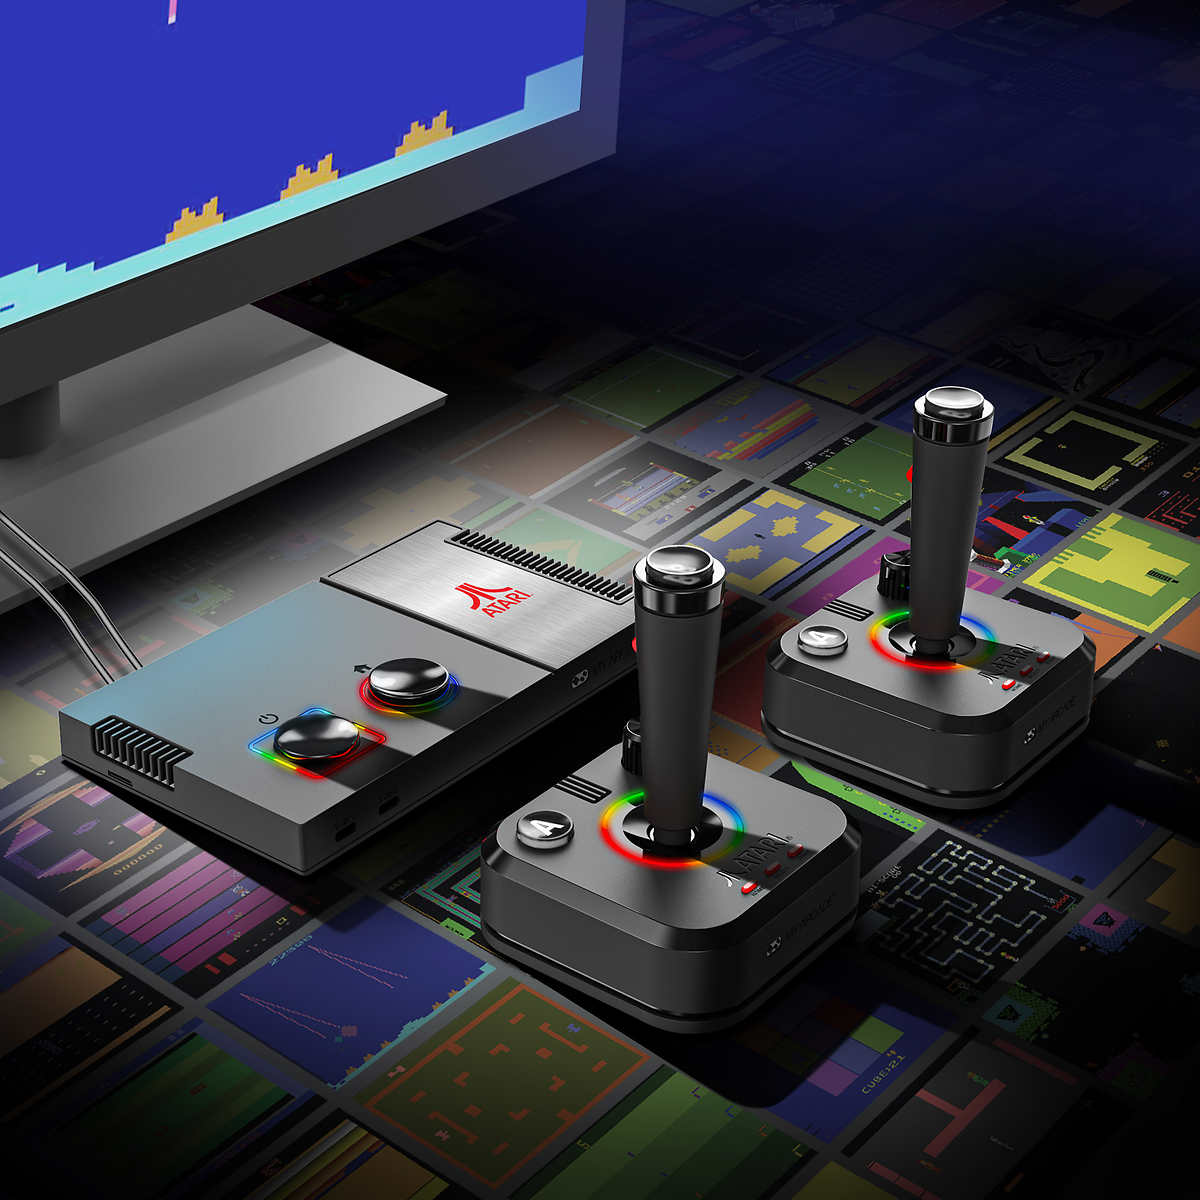 Atari Mon Arcade Games Station Pro